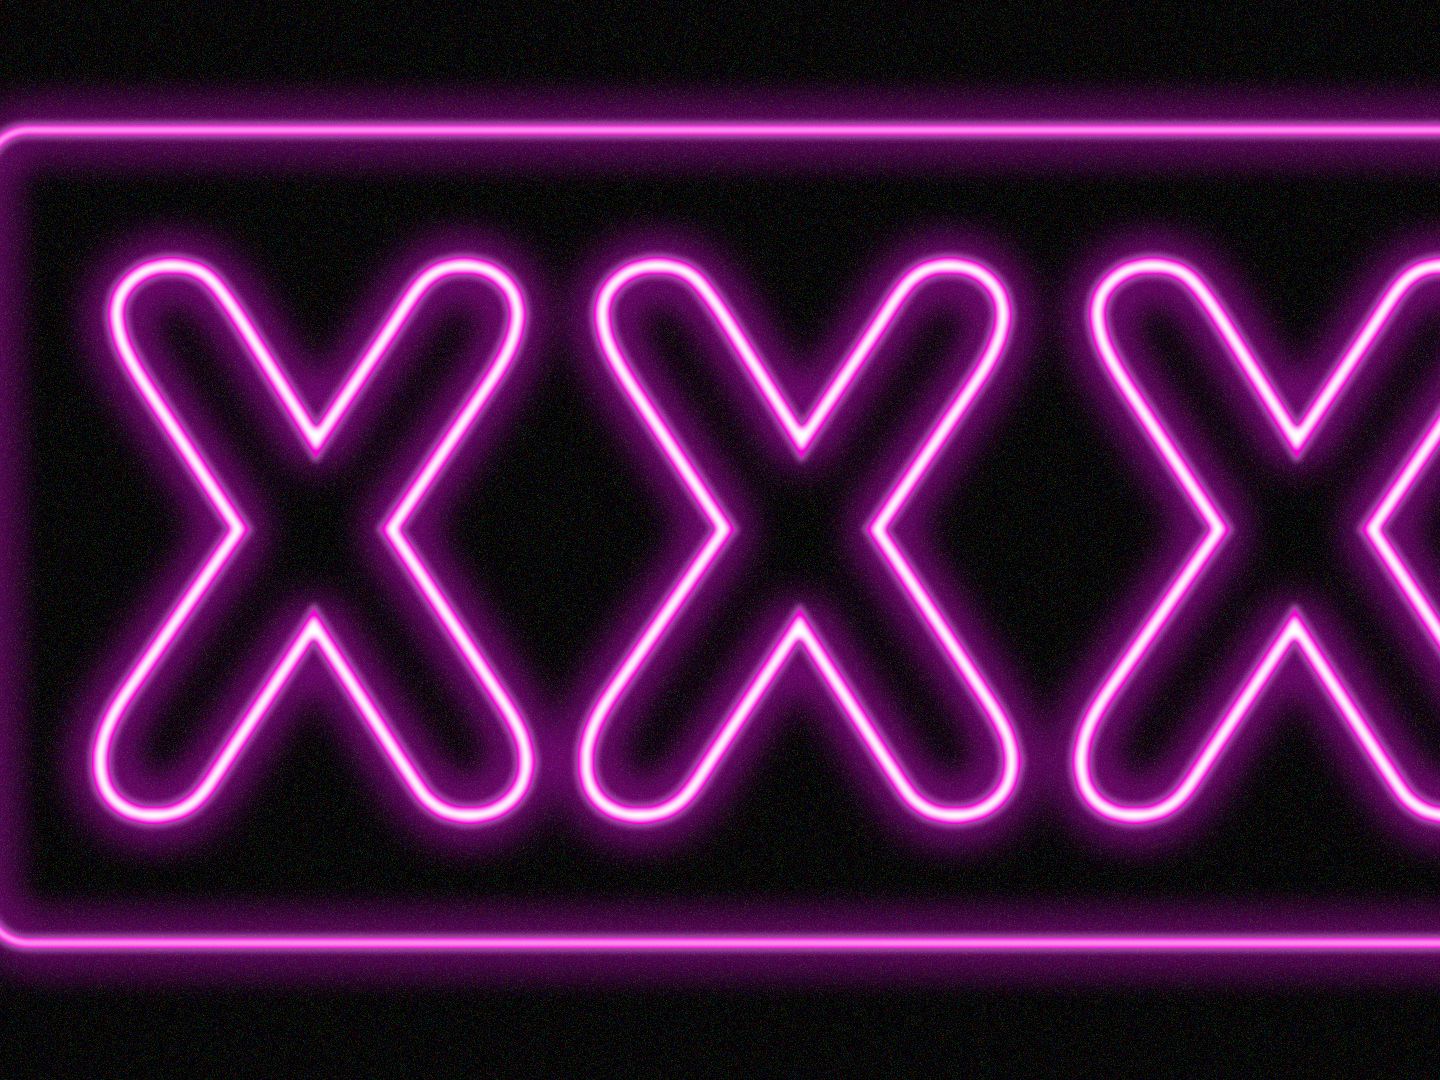 Xxx15 - New Pornhub owner has plans beyond porn